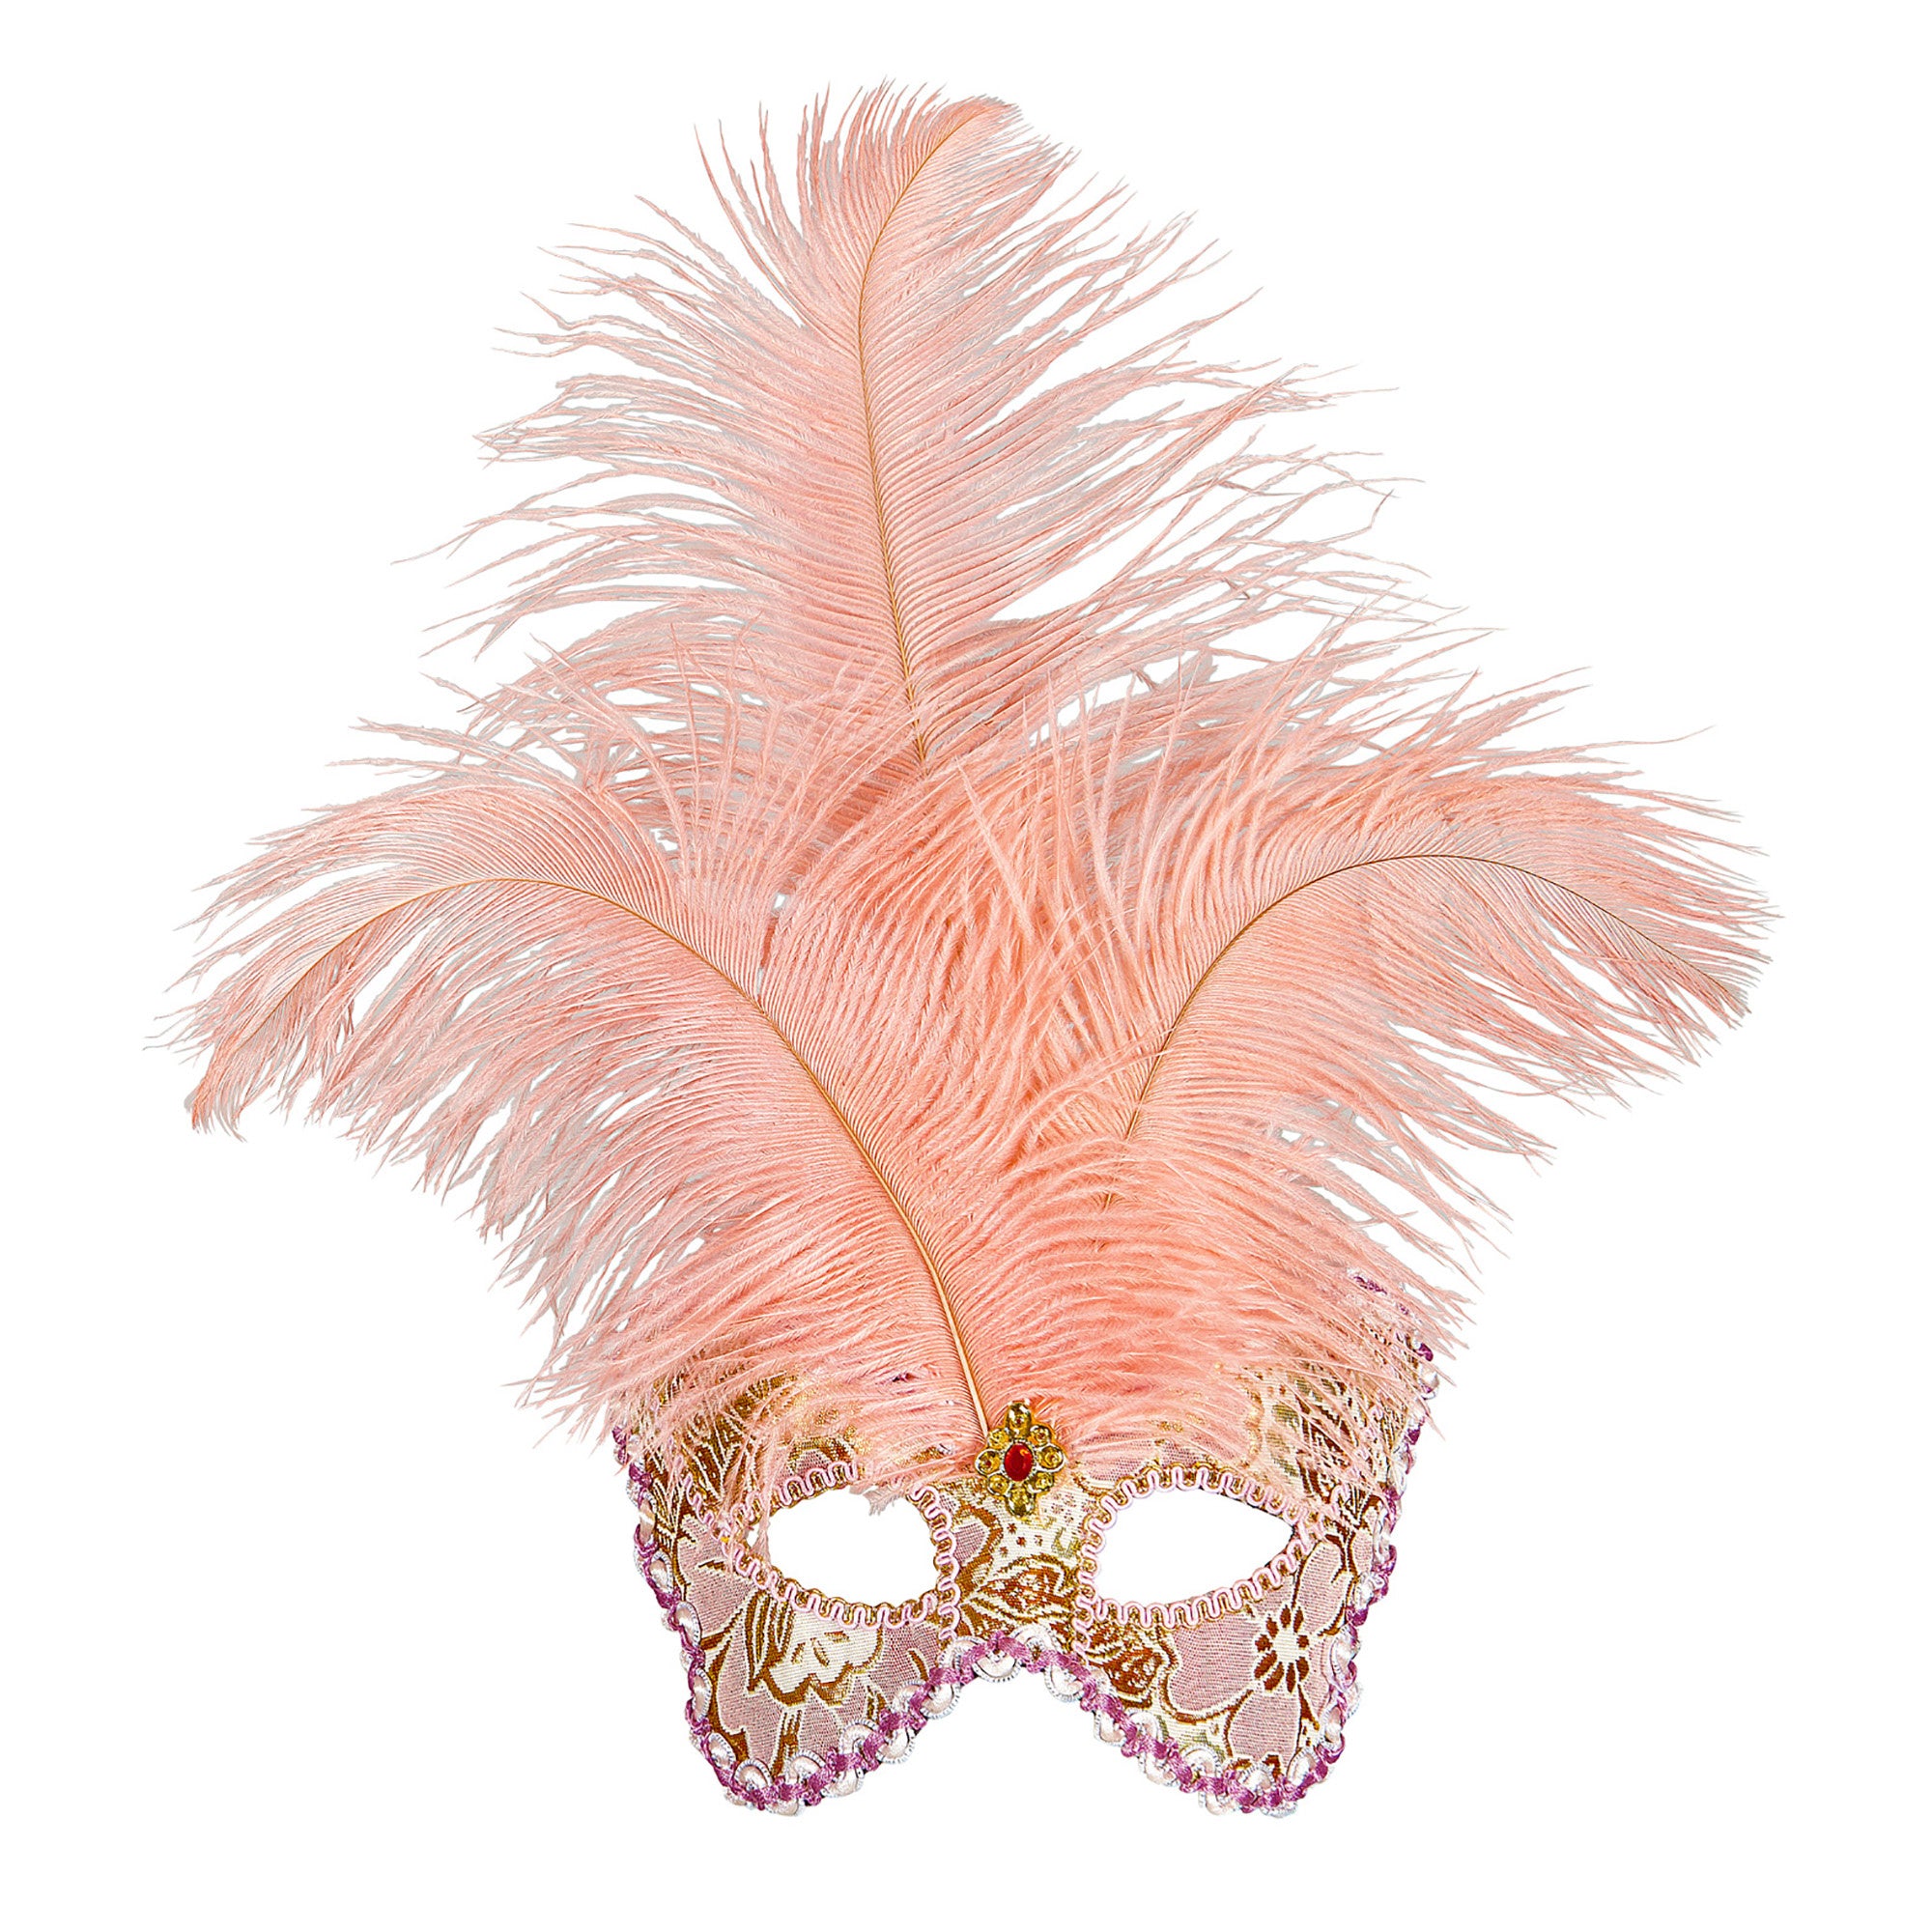 Widmann - Middeleeuwen & Renaissance Kostuum - Veren Masker Countess Met Glitters En Veren, Perzik - roze - Carnavalskleding - Verkleedkleding